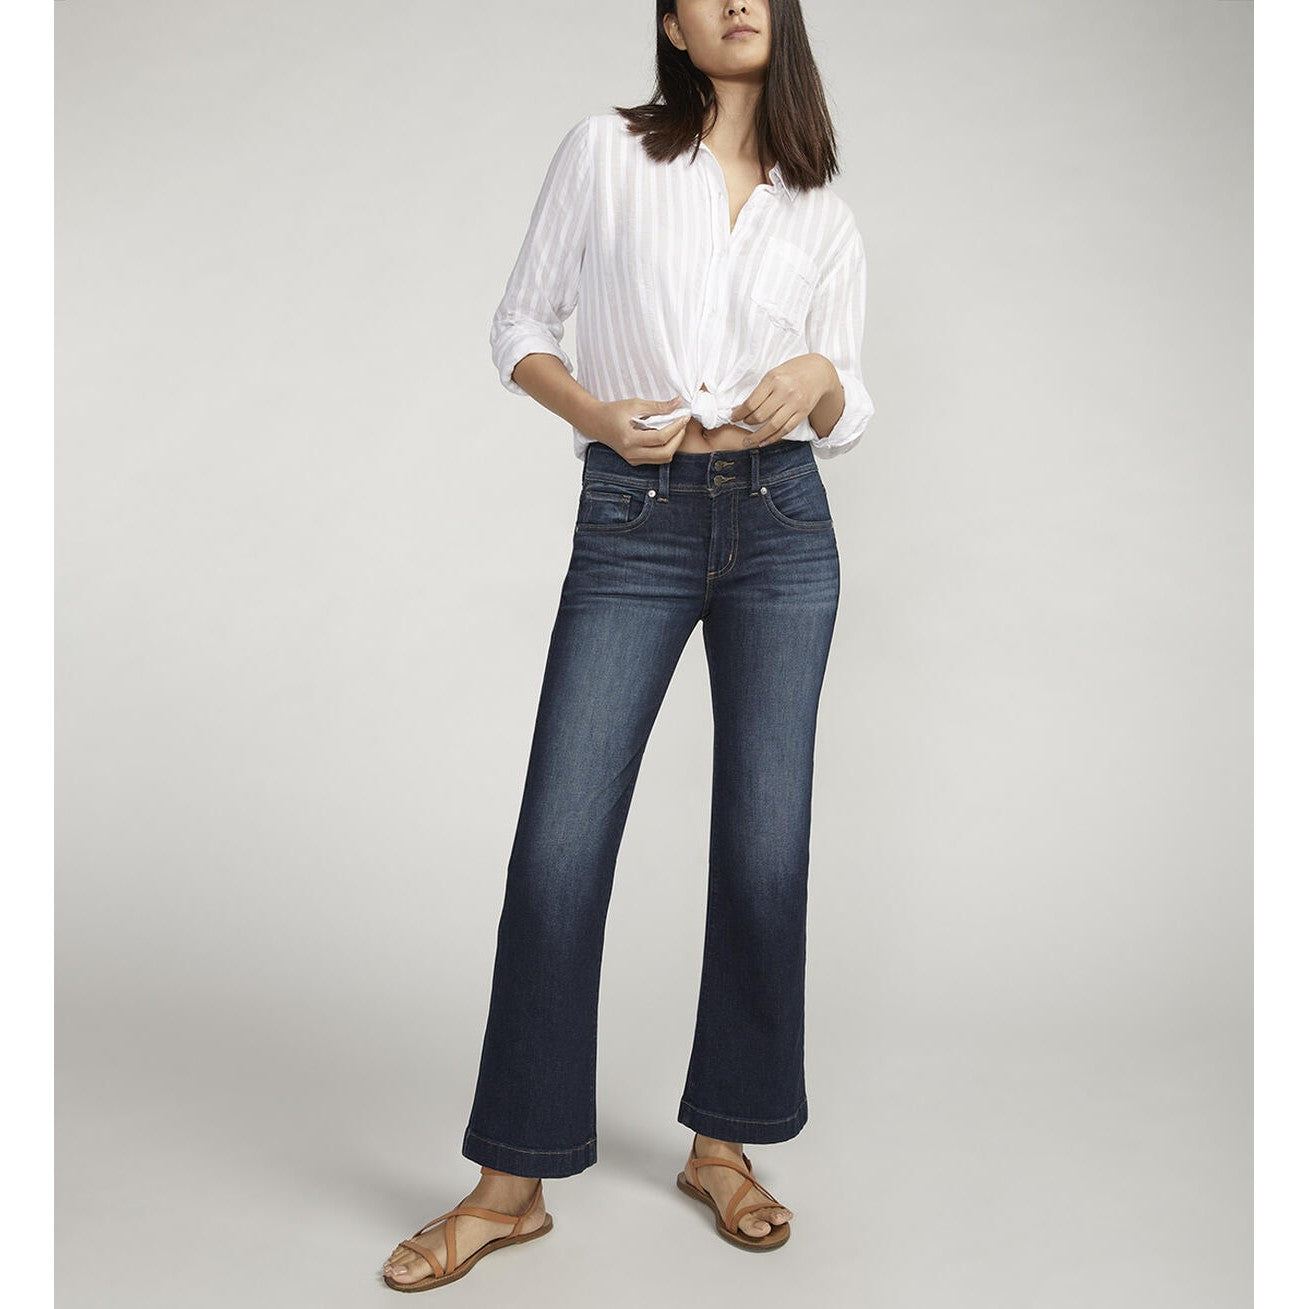 Womens Jeans Casual Mid Waist Pants Trousers Pockets Classic Denim Jeans  Express Jean Leggings for Women Khaki at  Women's Jeans store